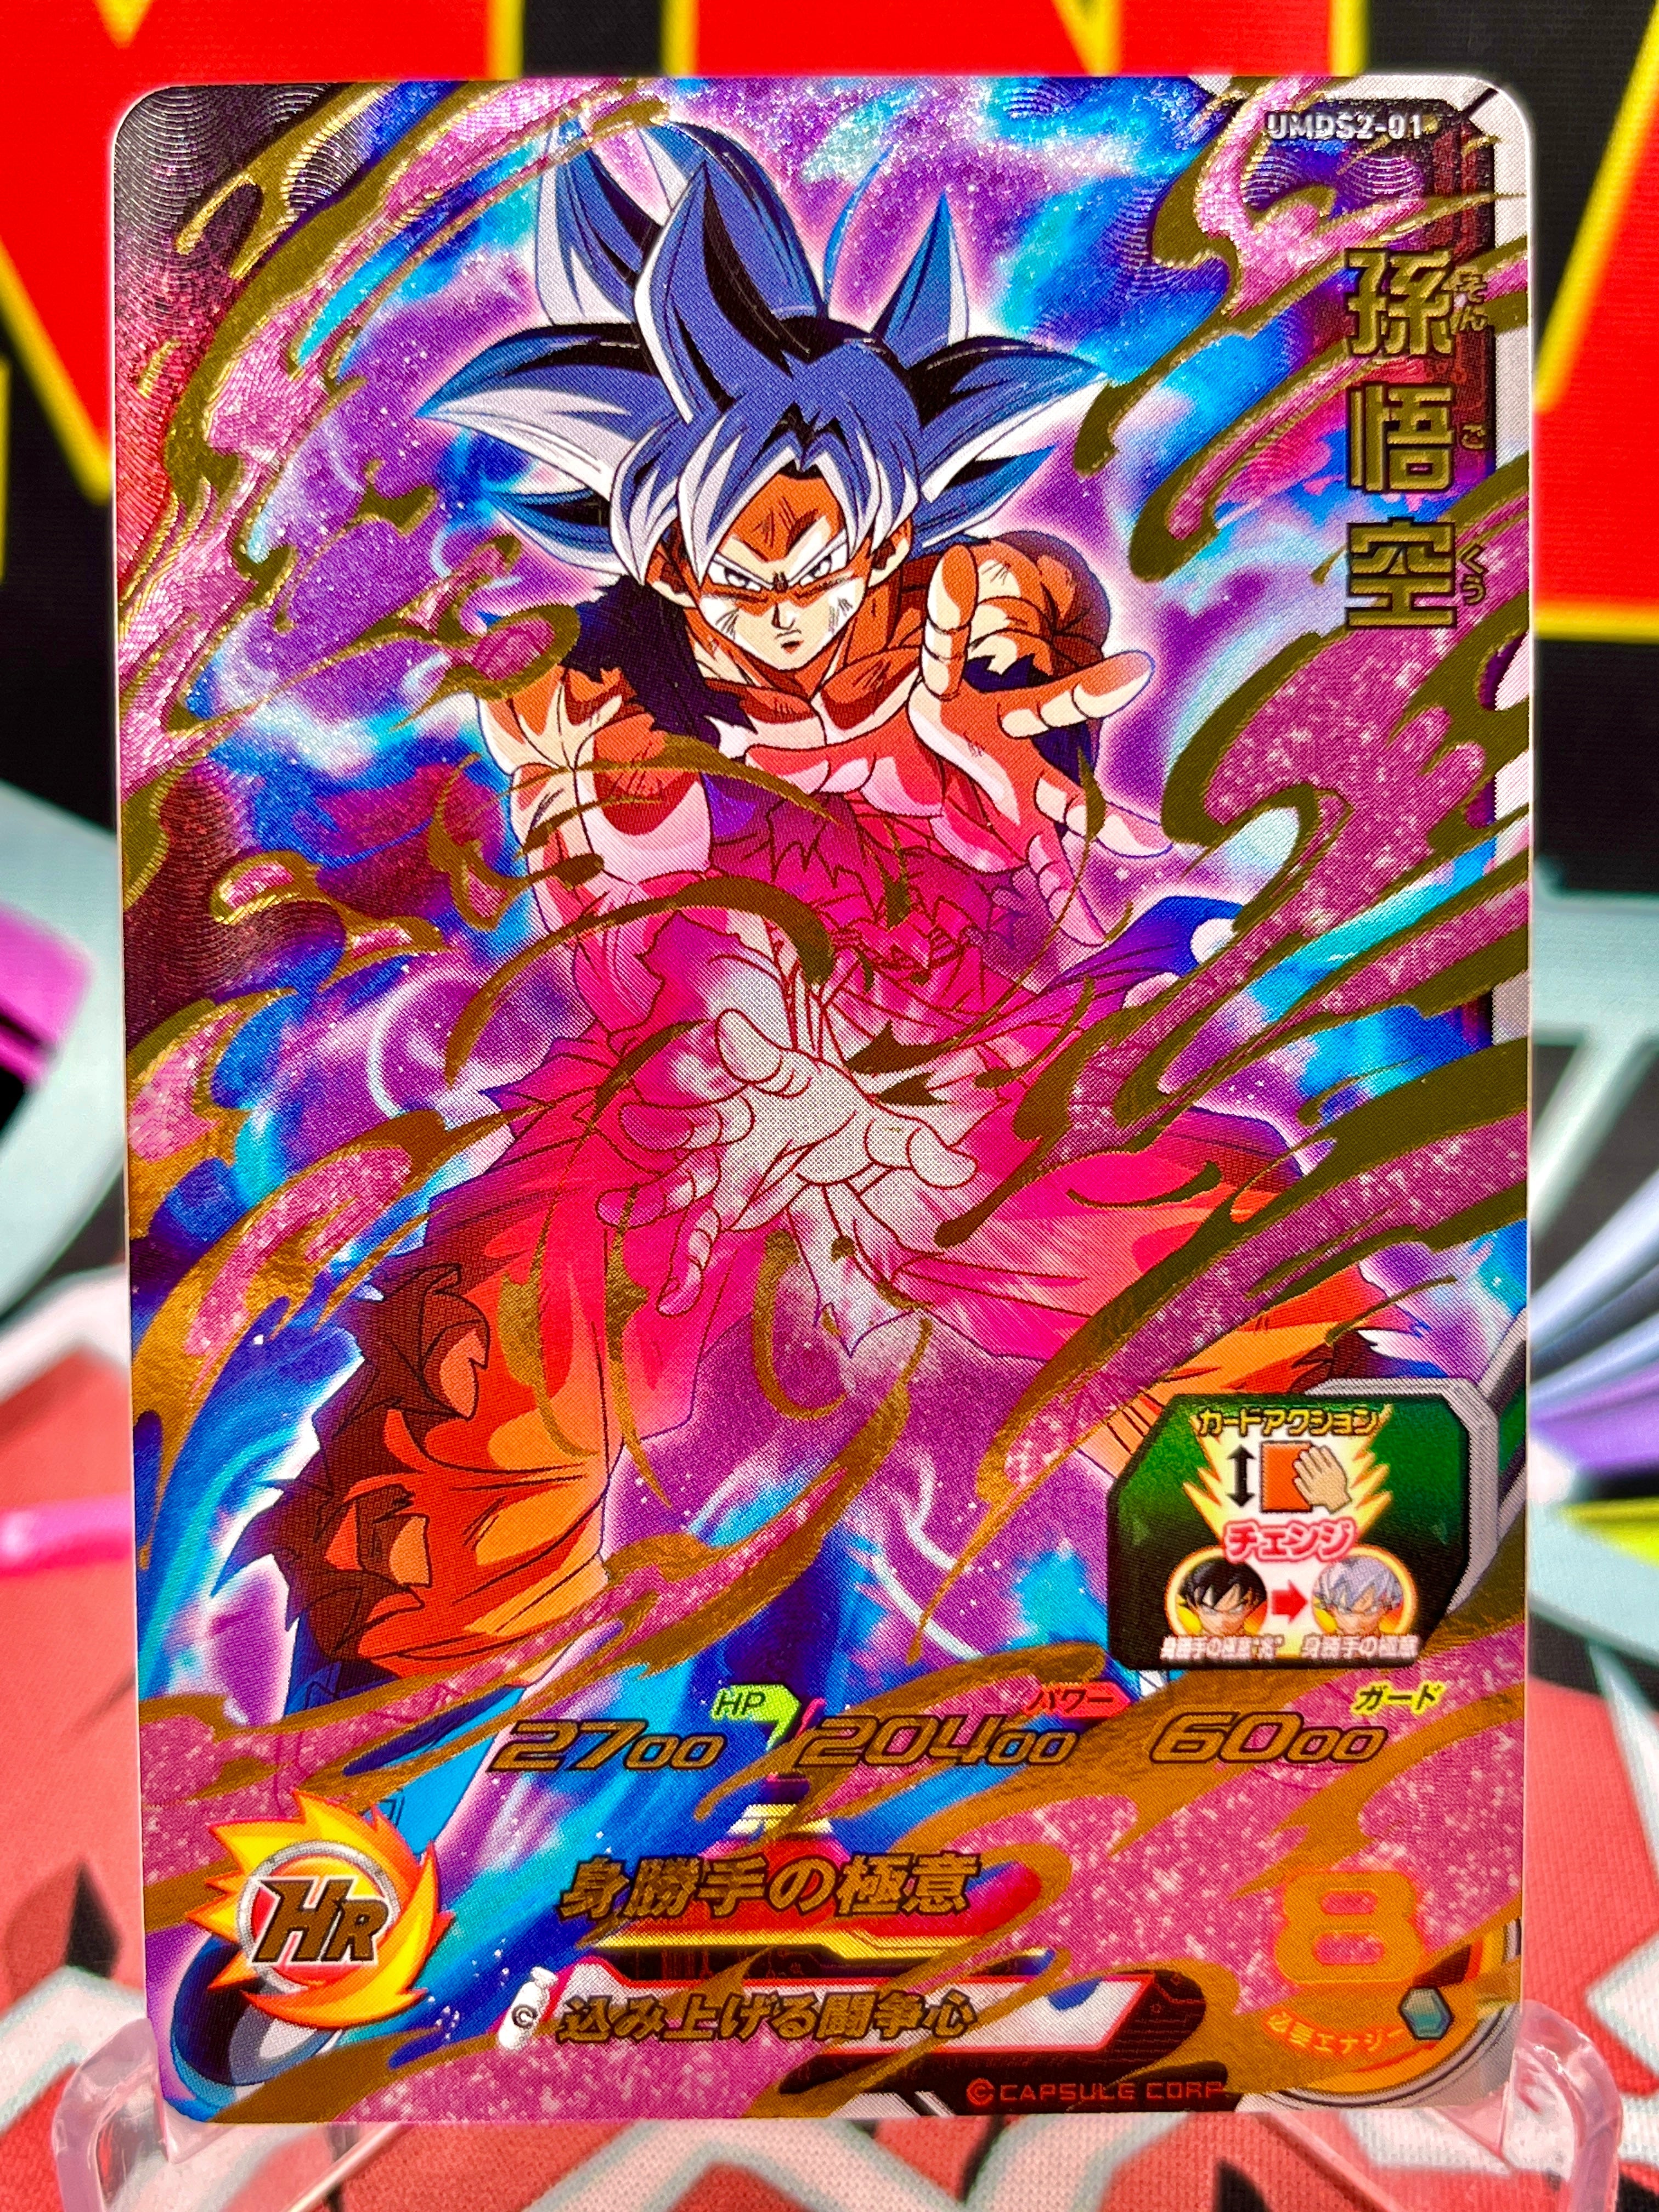 UMDS2-01 Son Goku Promo (2019)